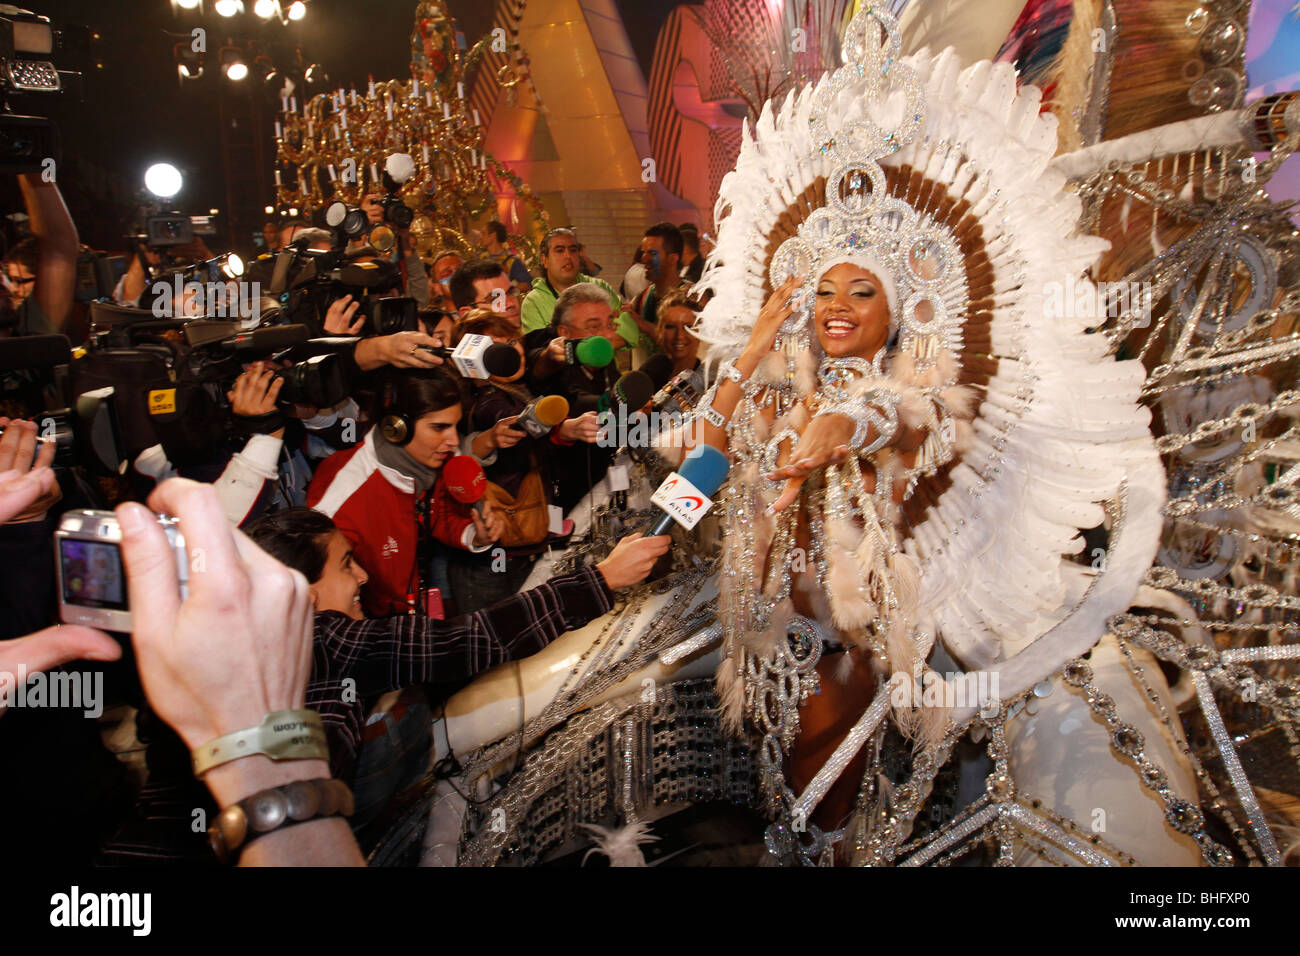 Queen Of Carnival Fotos e Imágenes de stock - Alamy